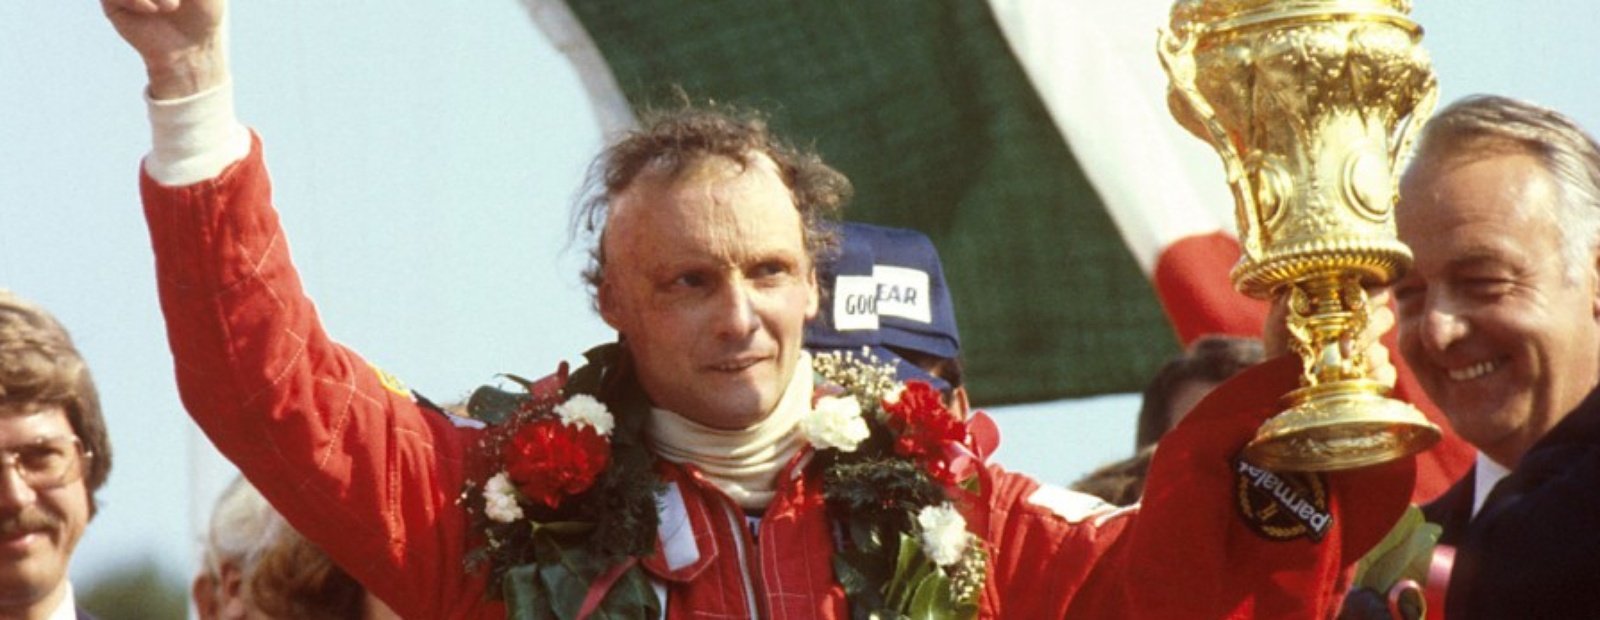 Wishing a very happy 70th birthday to the legend Niki Lauda. 